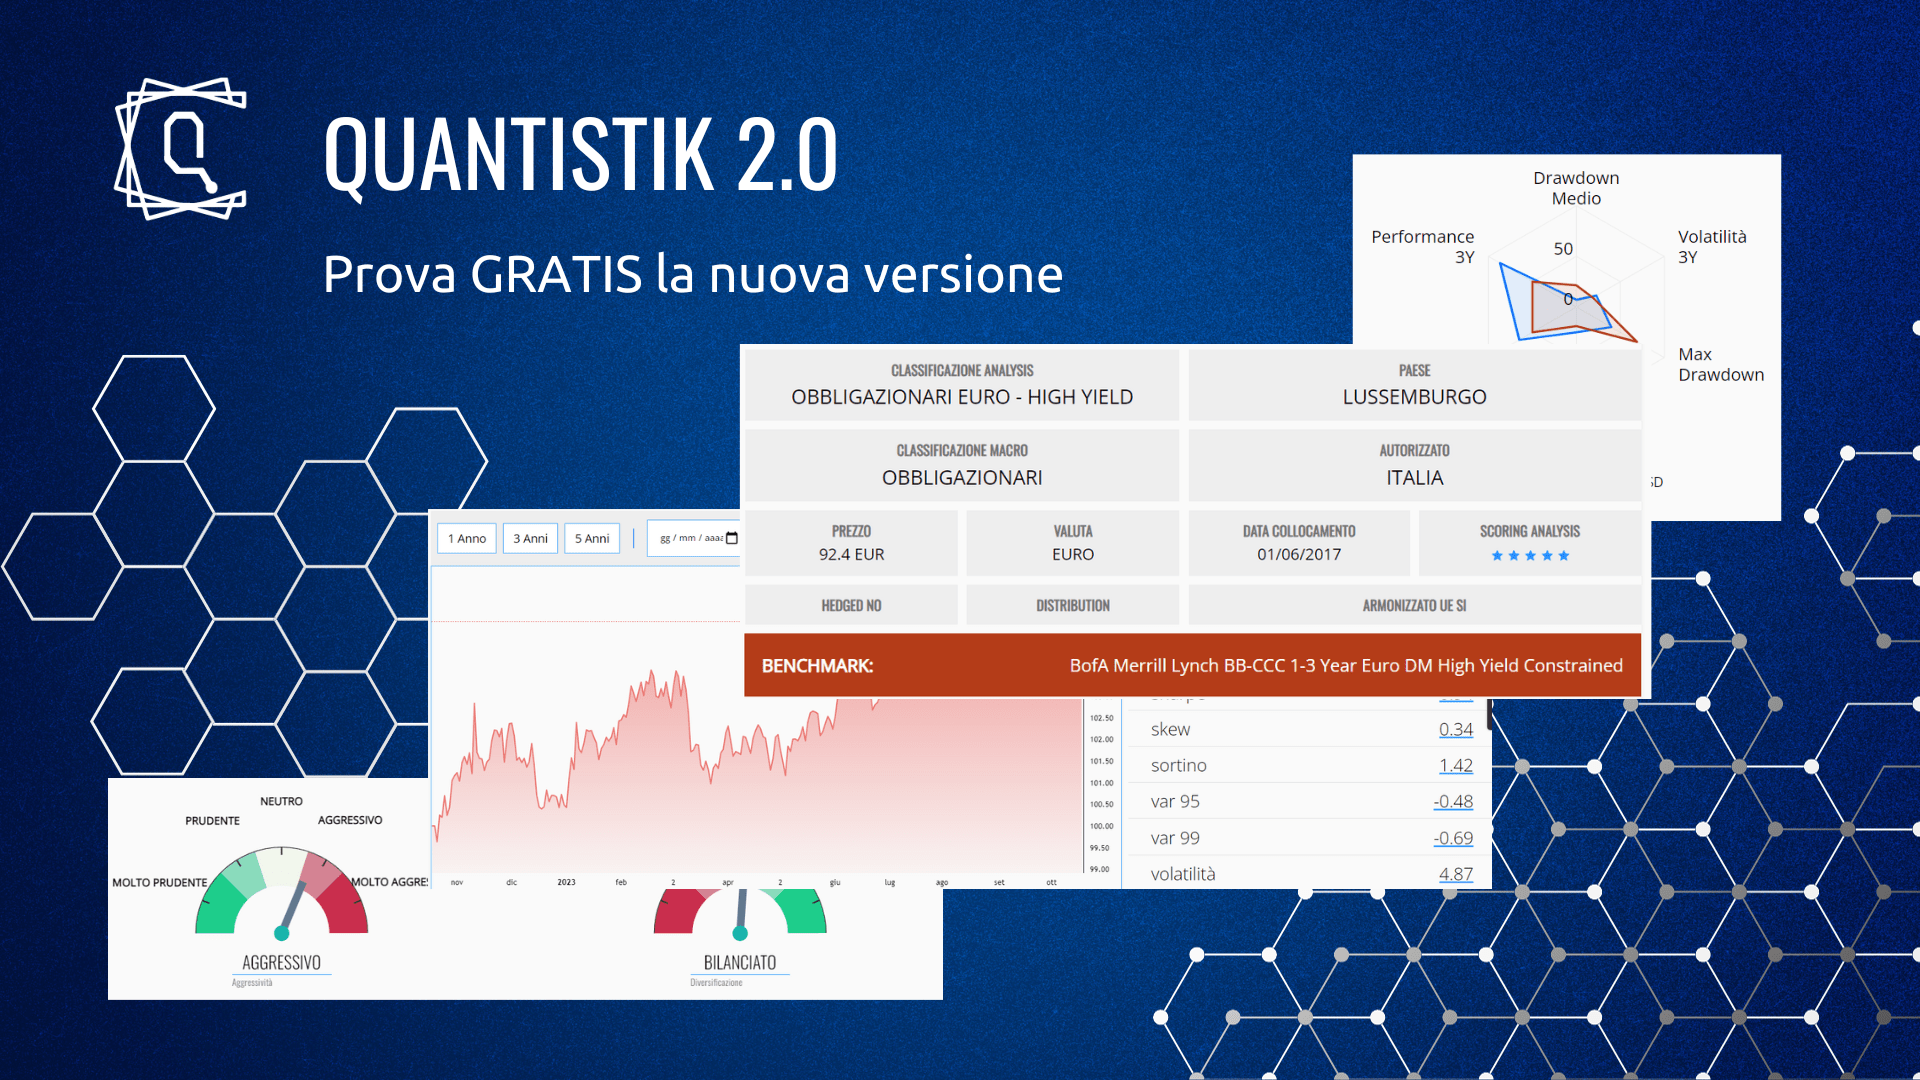 Quantistik 2.0: prova gratis la nuova versione